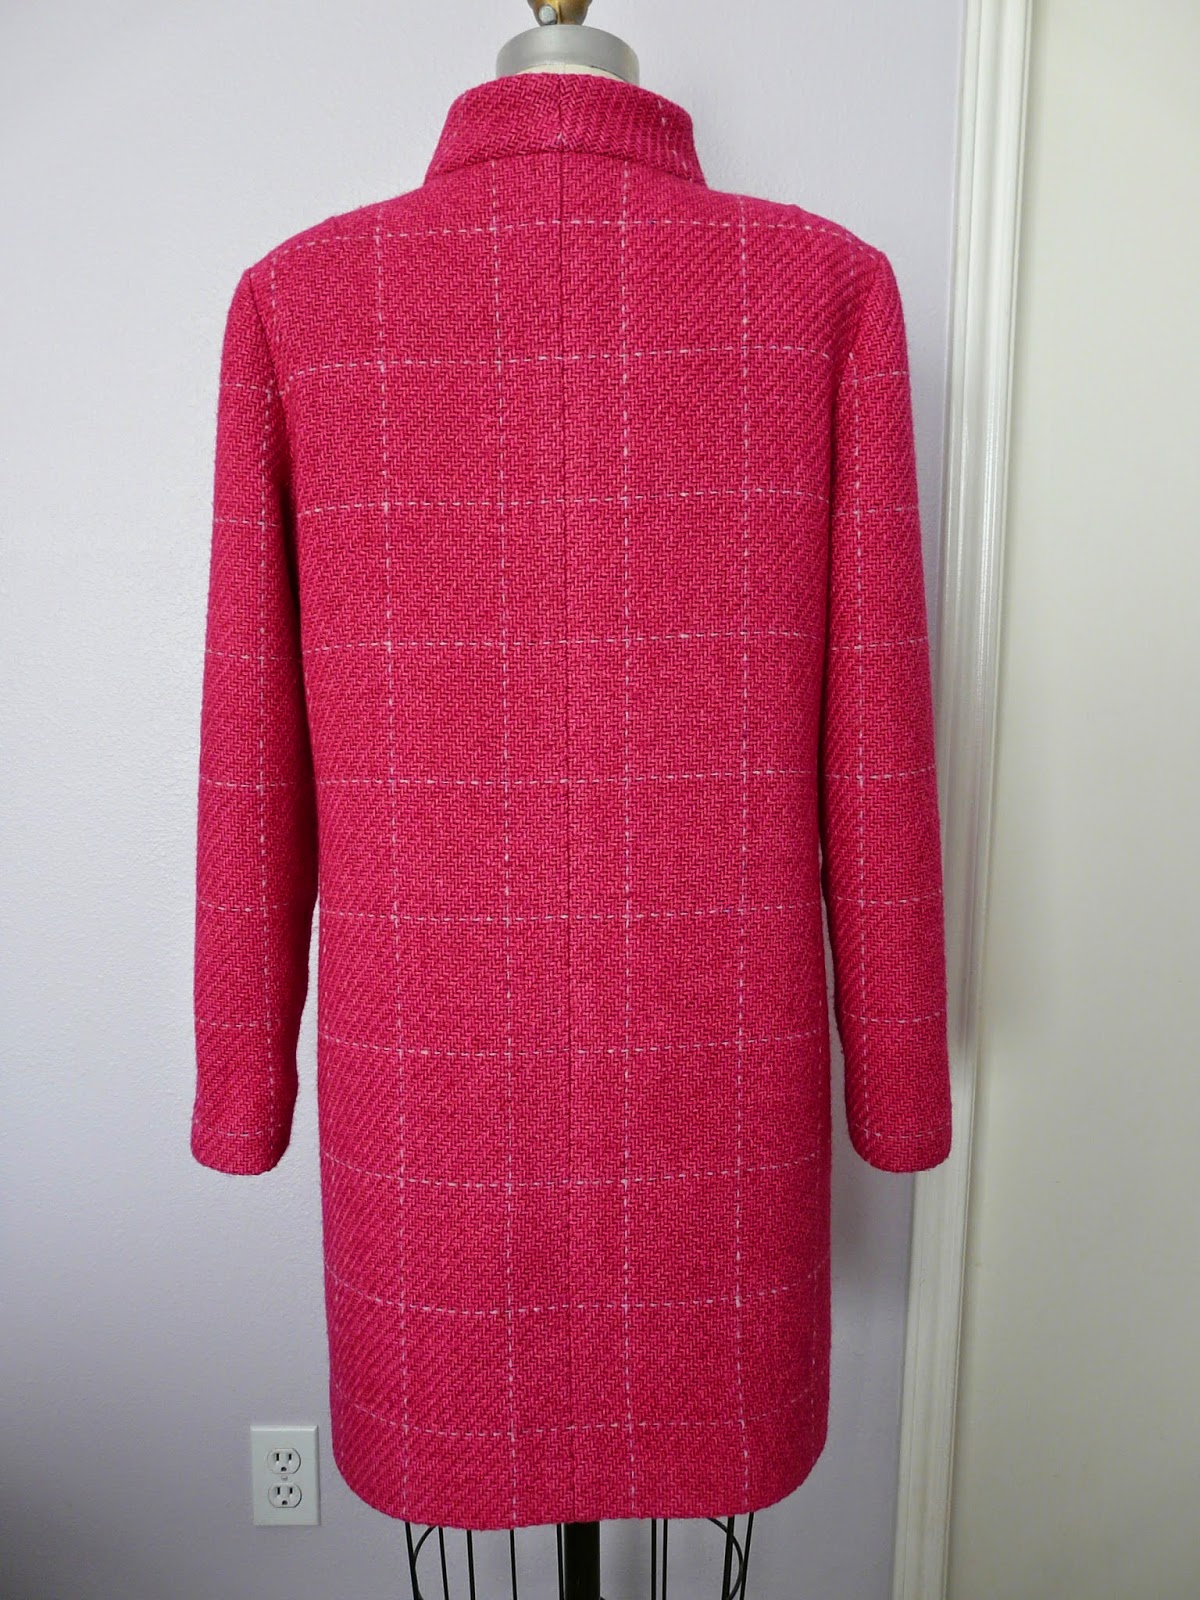 Amanda's Adventures in Sewing: Vogue 8933 - Hot pink wool coat